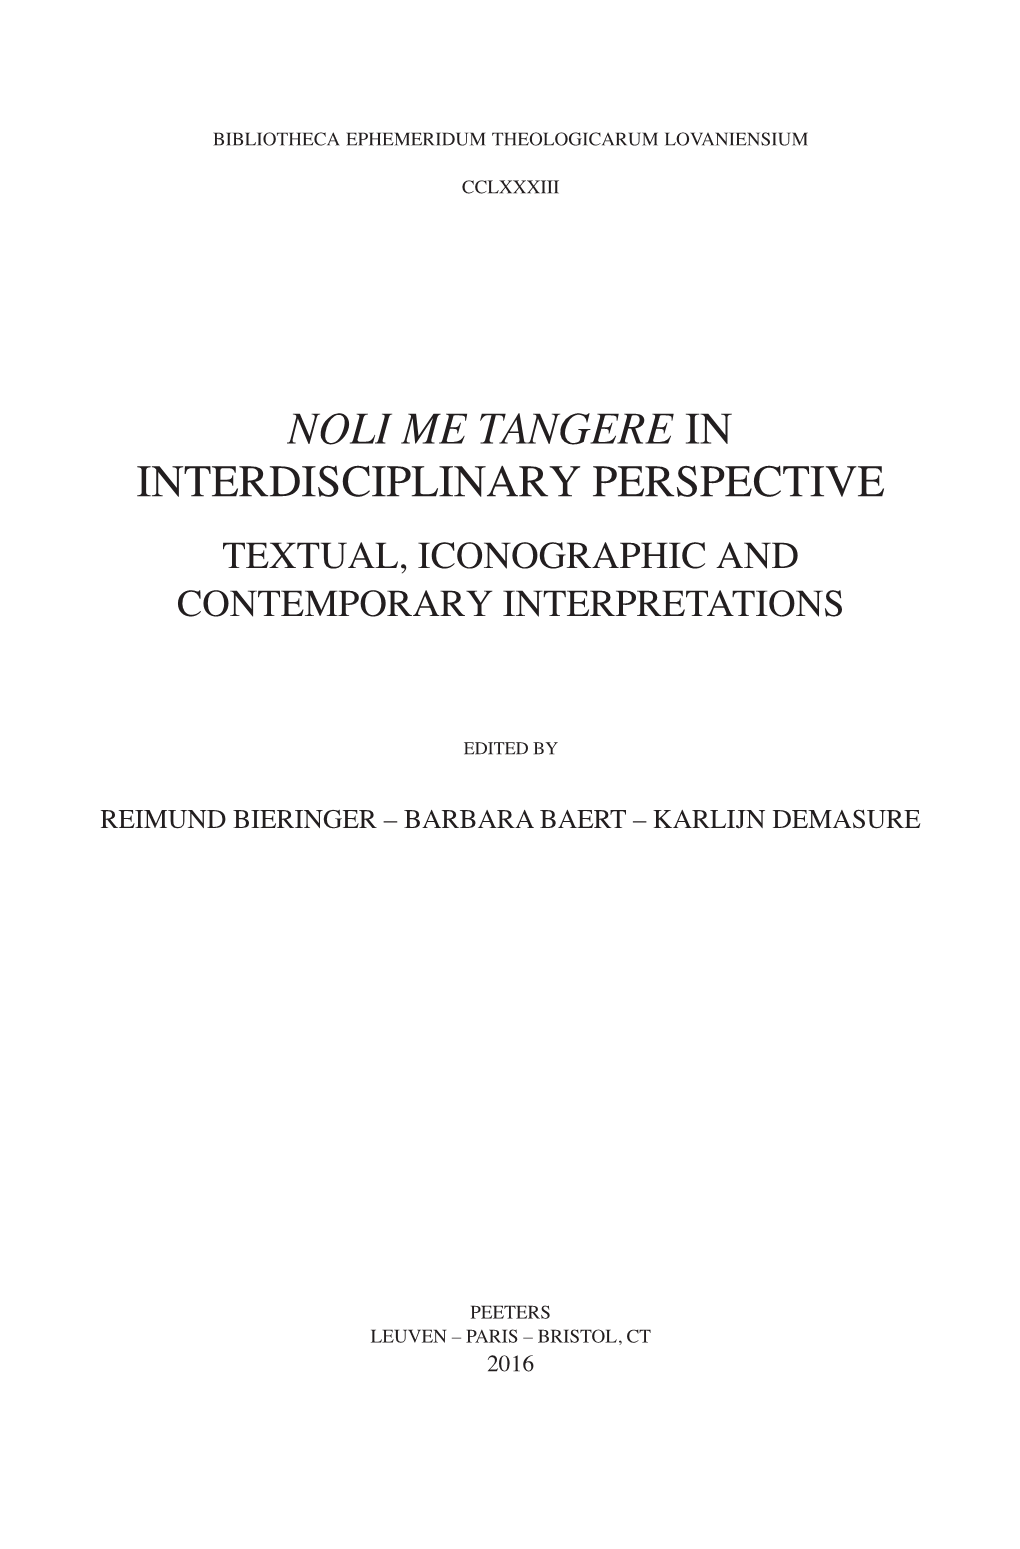 Noli Me Tangere in Interdisciplinary Perspective Textual, Iconographic and Contemporary Interpretations